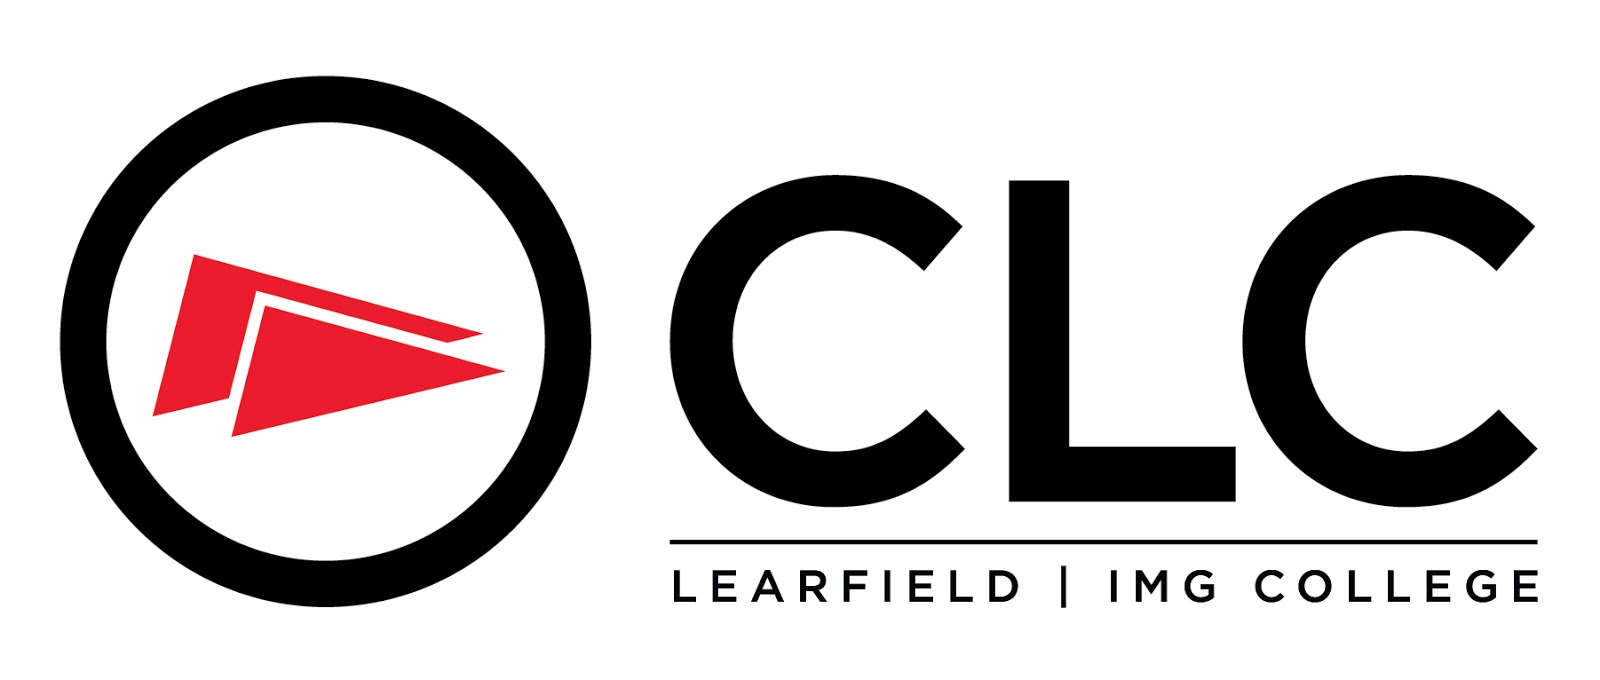 CLC Learfield IMG College logo